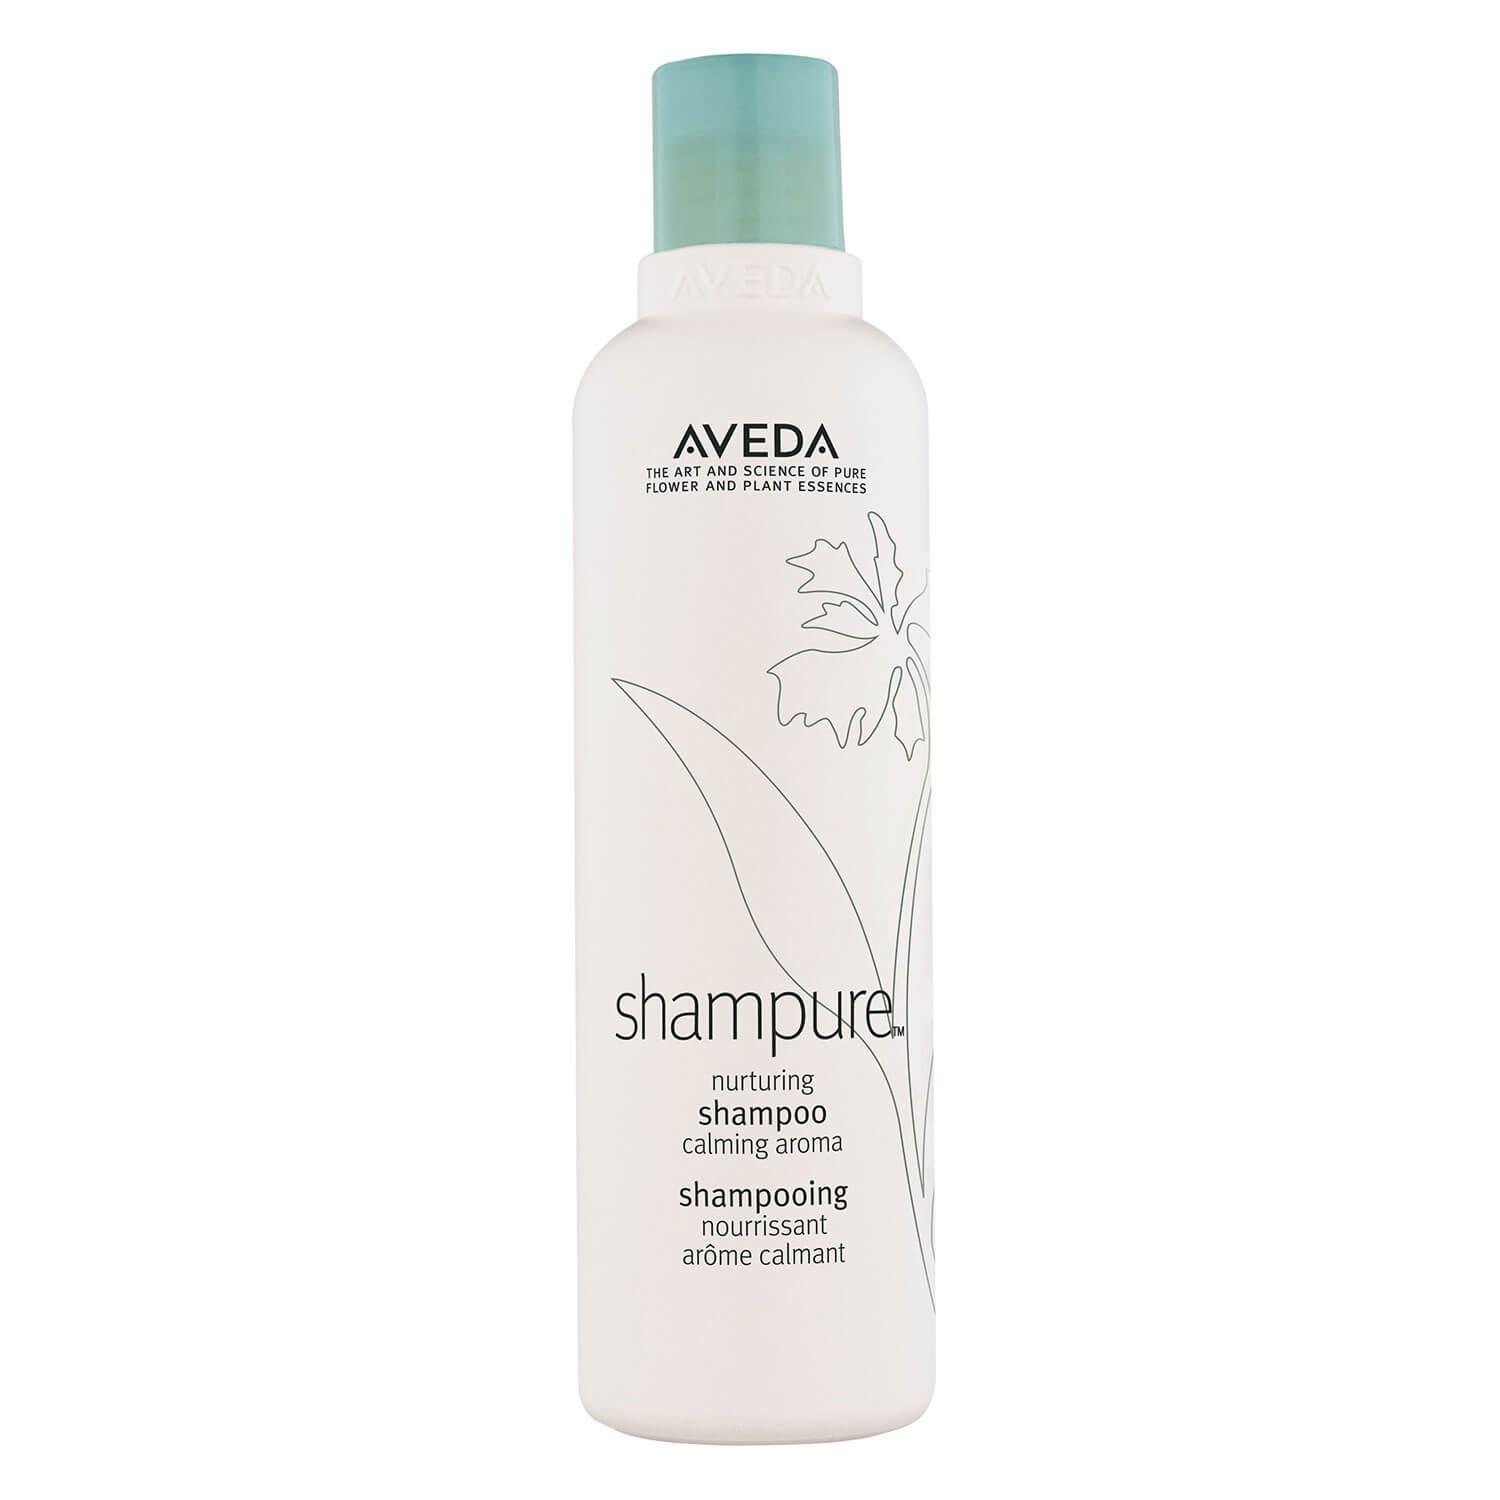 shampure - nurturing shampoo